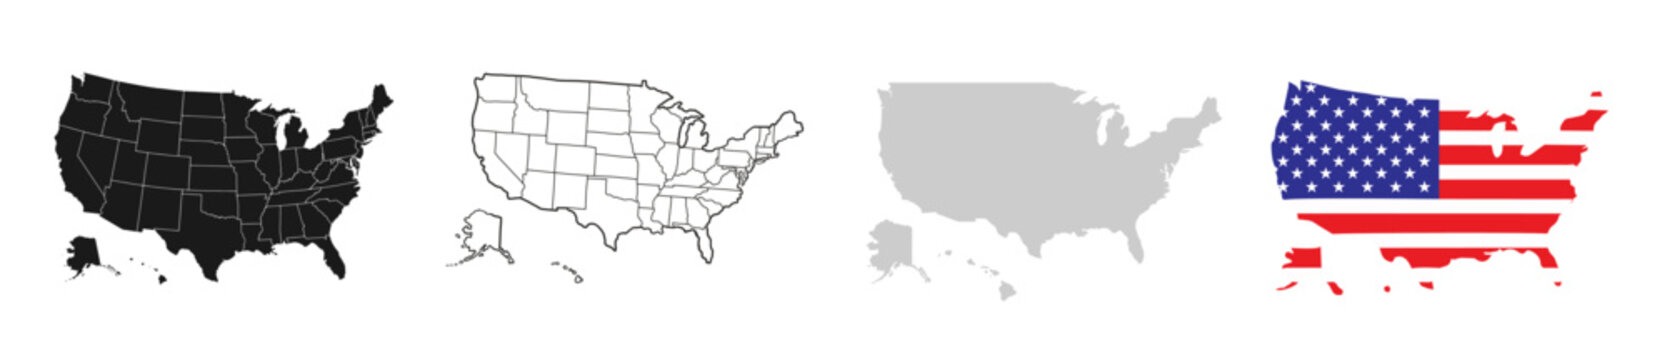 USA map set. 